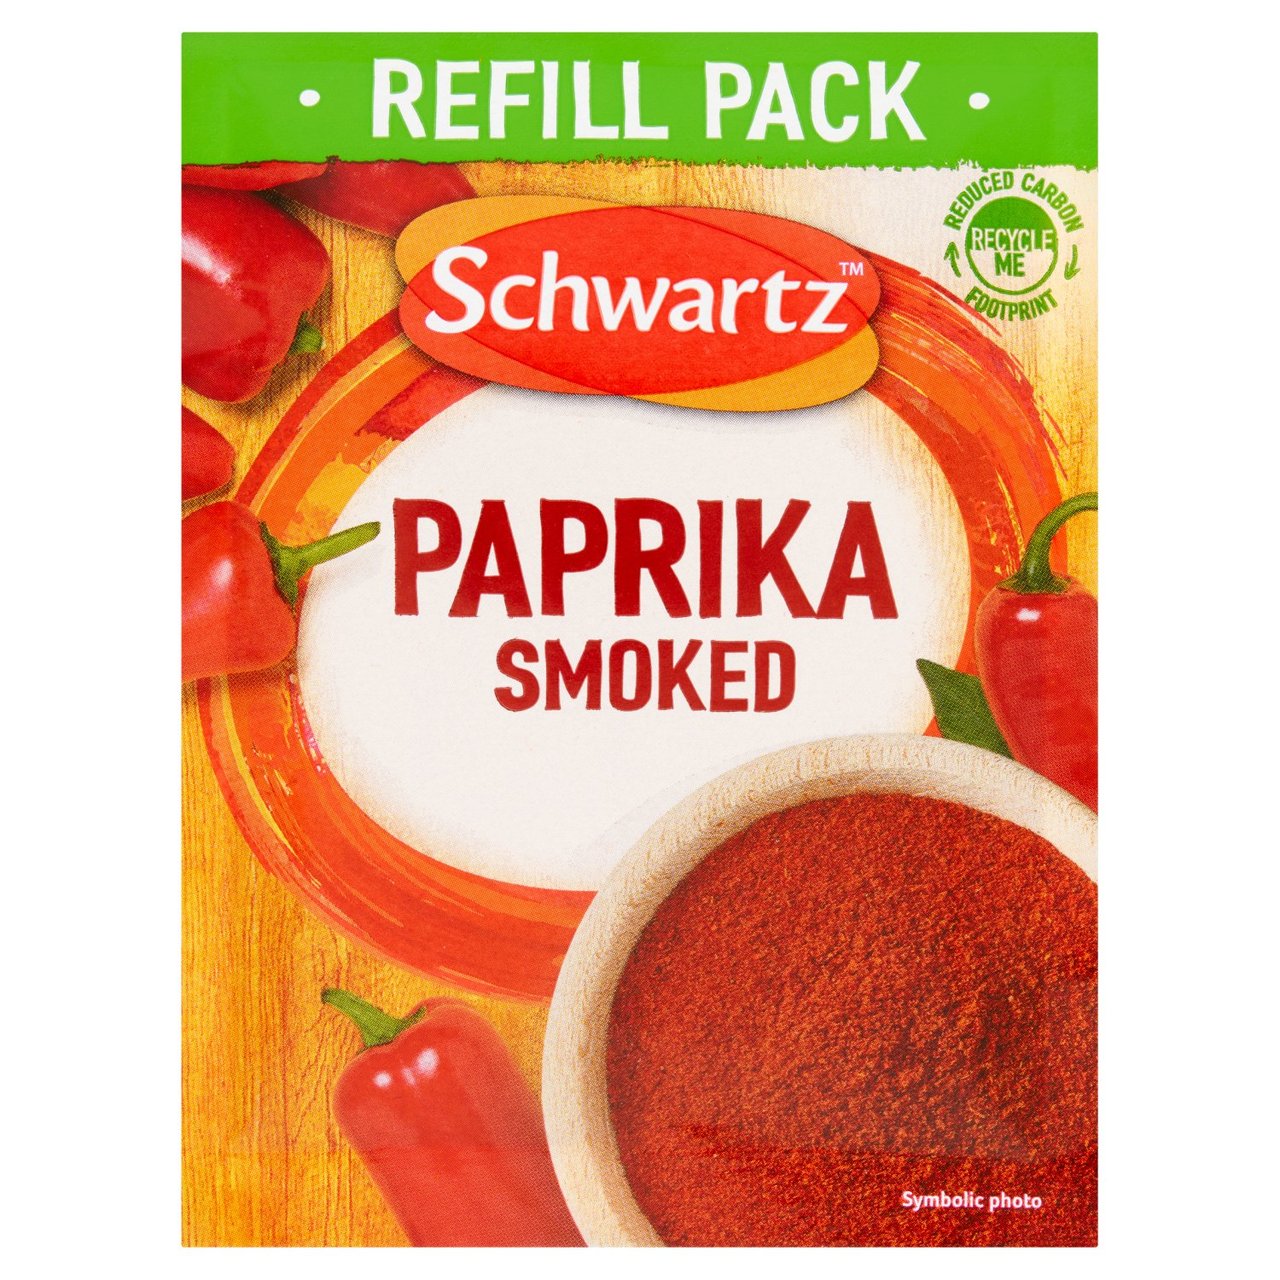 Schwartz Smoked Paprika Refill Pack